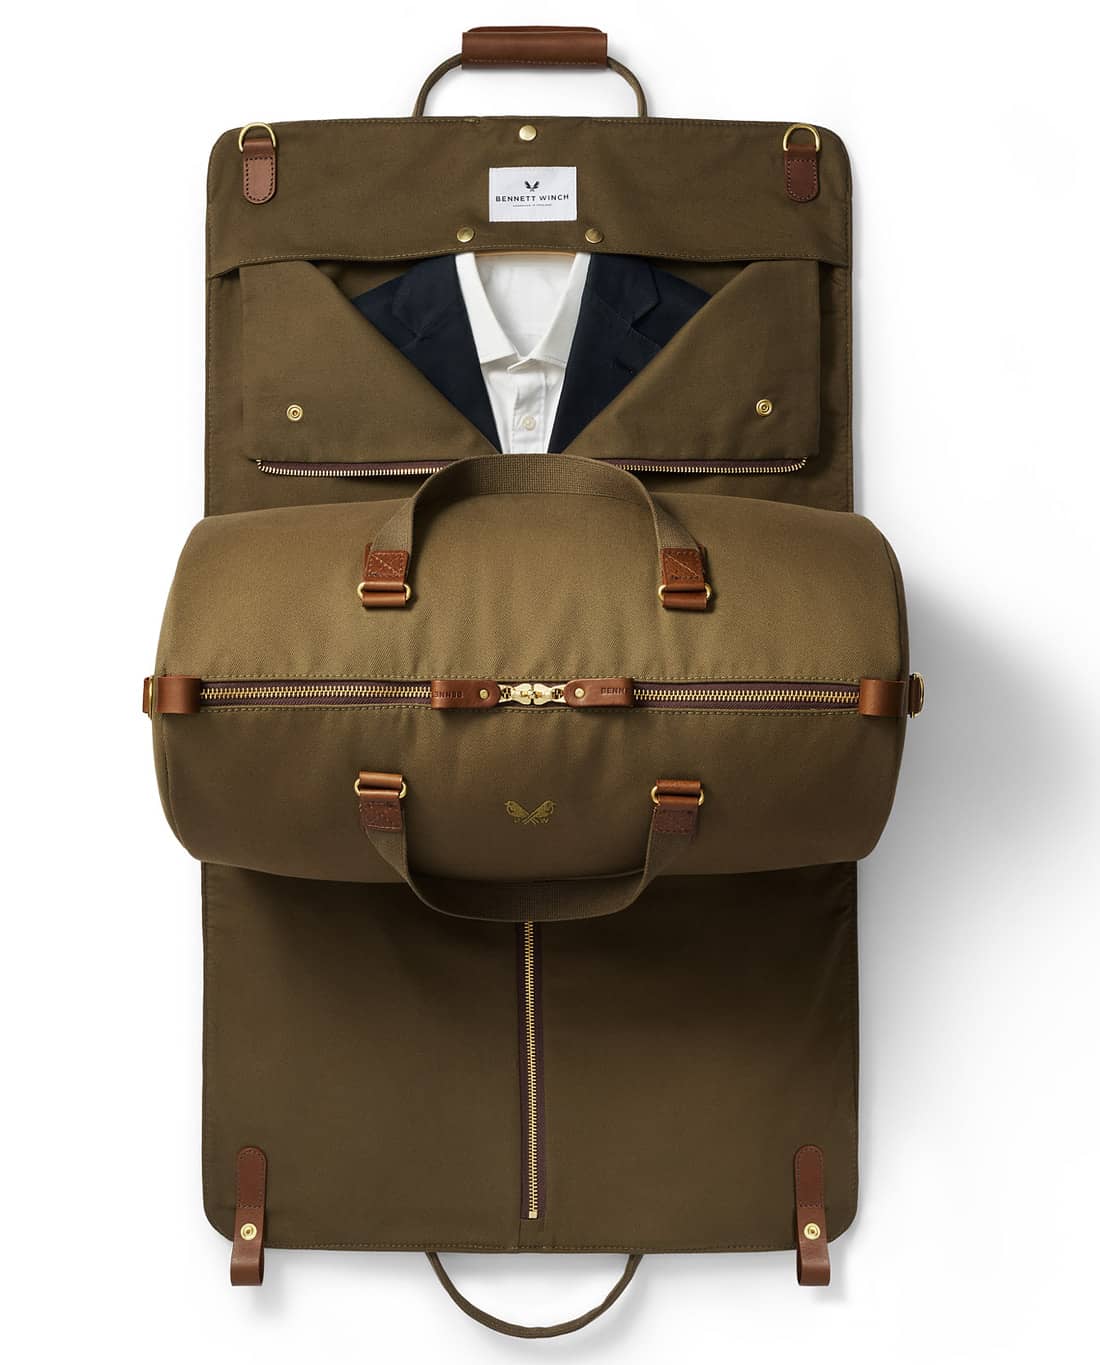 ernstig Koopje Reiziger The Best Garment Bags for Travel